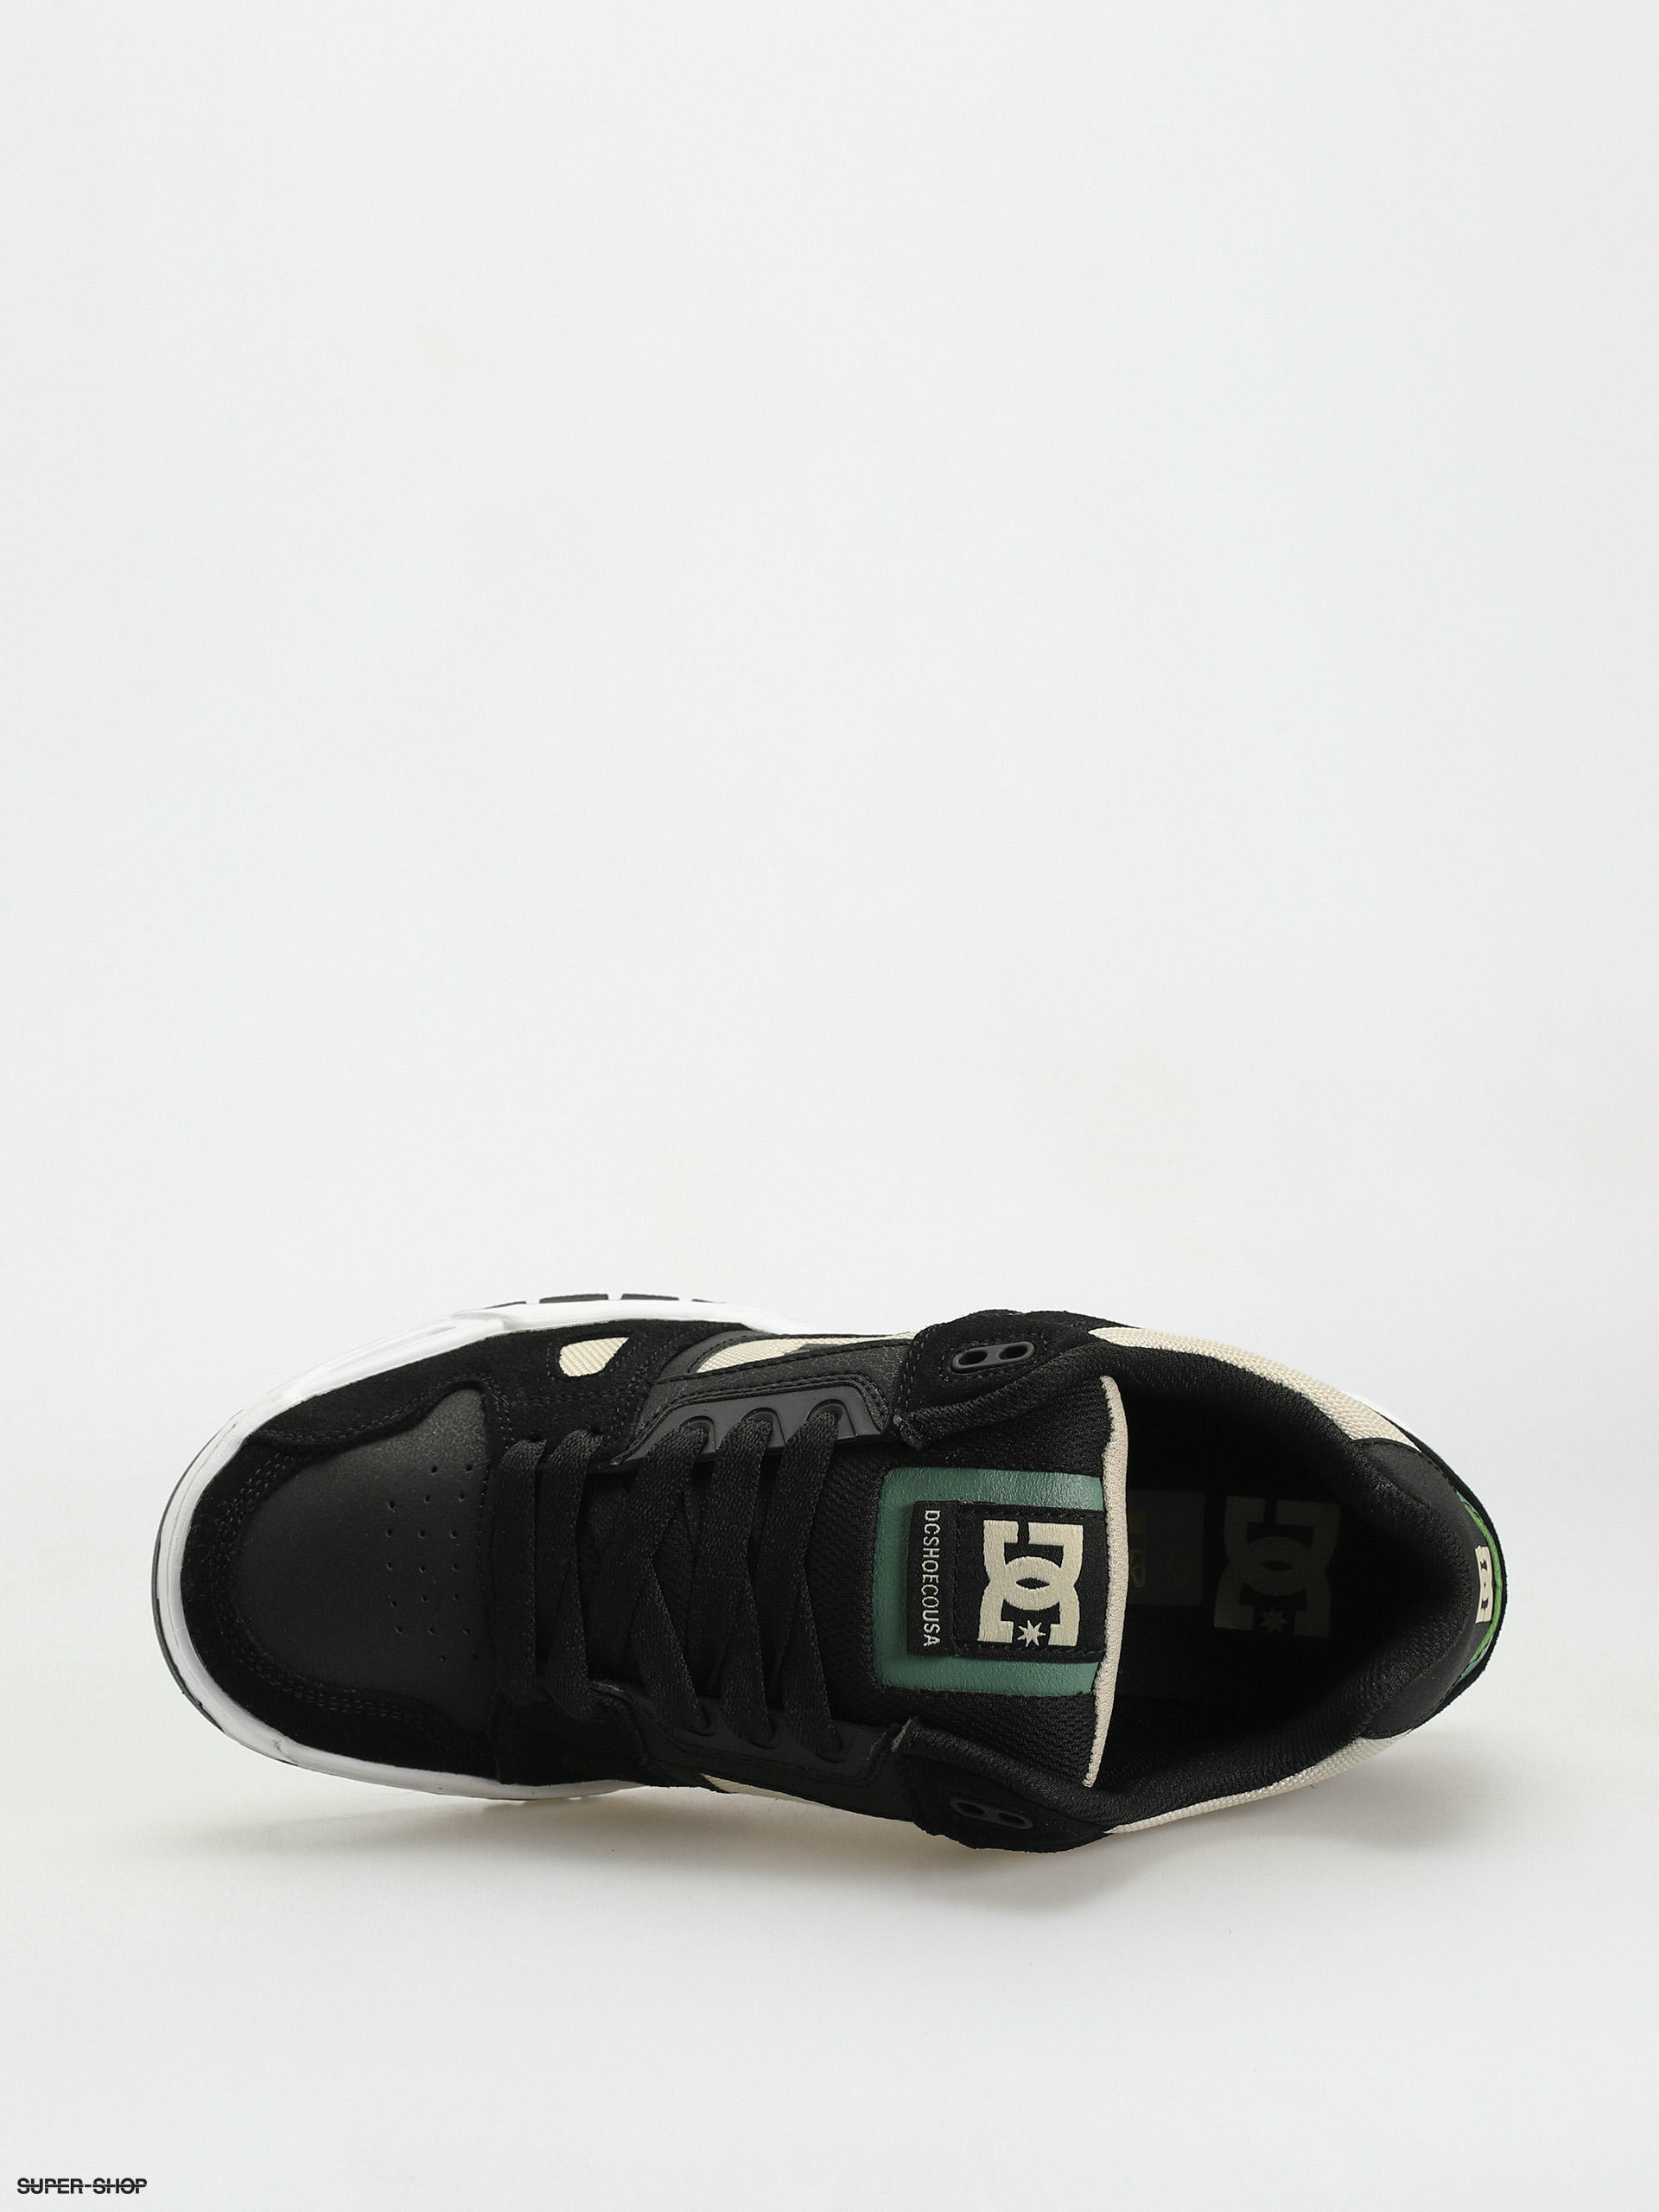  DC Men's Stag Low Top Skate Shoe, TAN/Green, 11